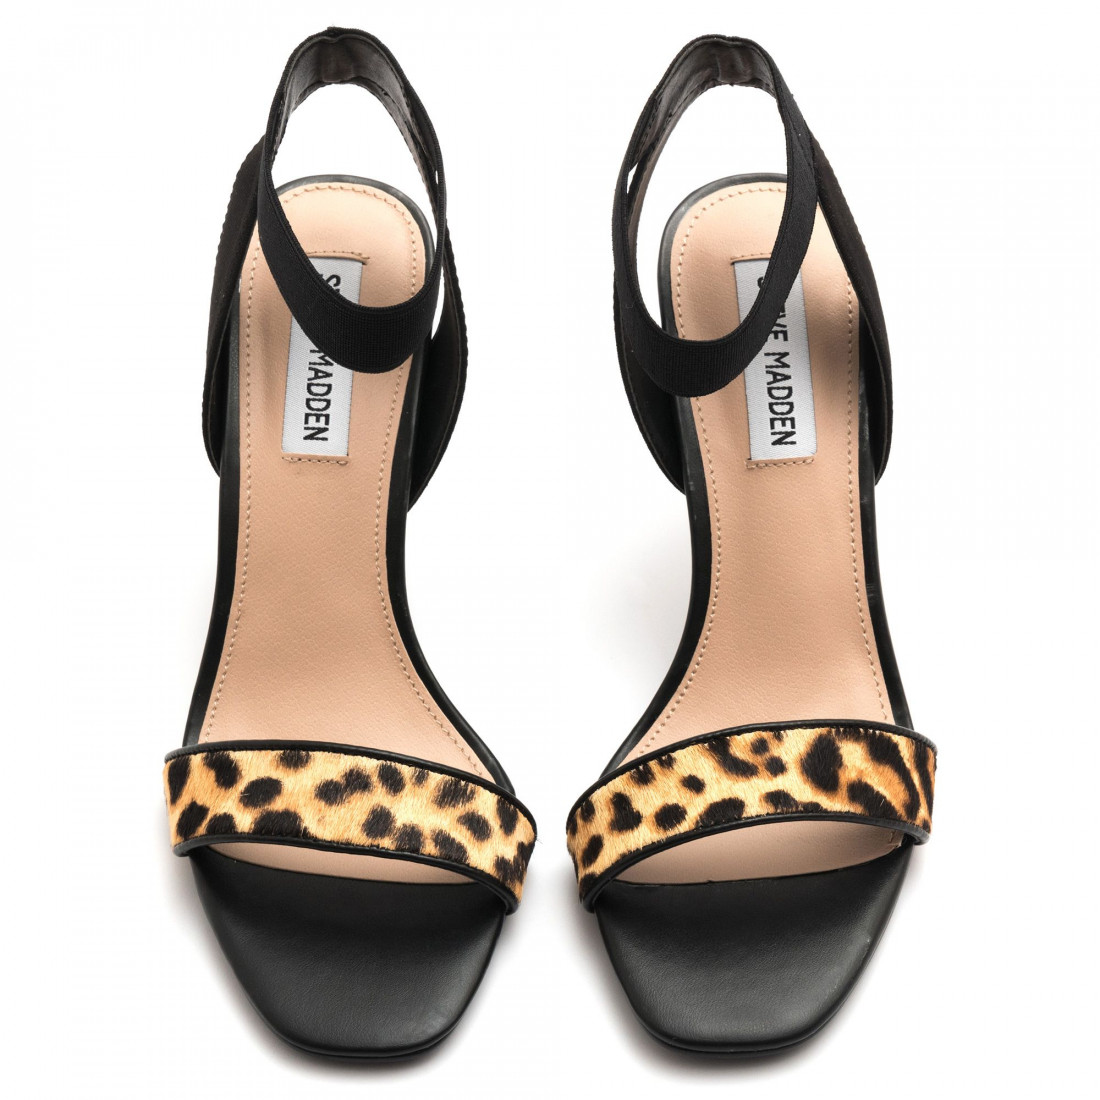 Sandalias de leopardo Fondu de Steve Madden